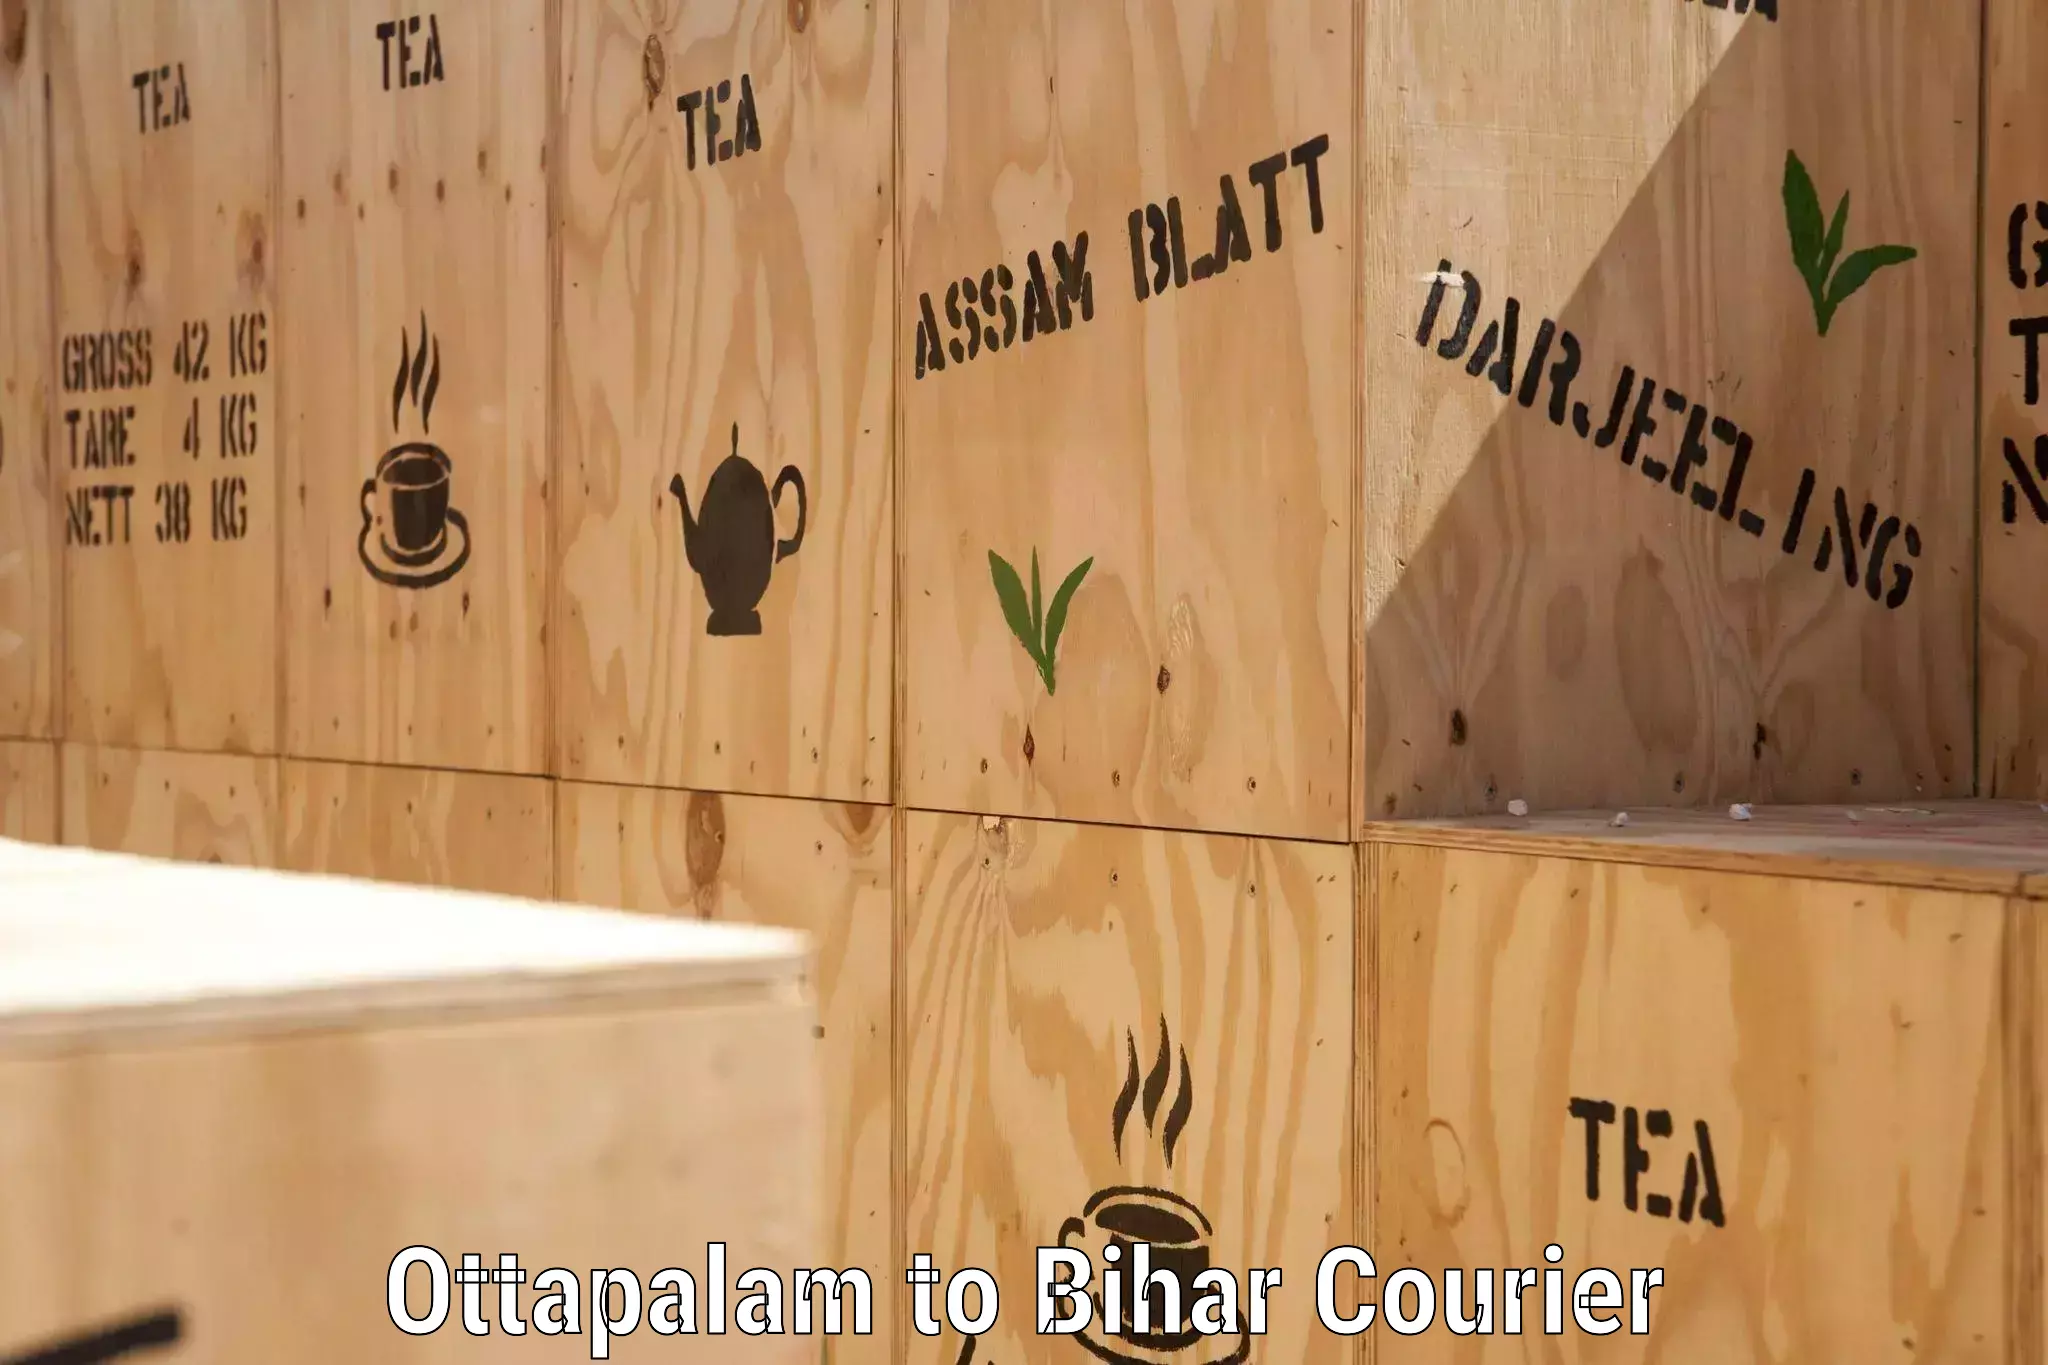 Tech-enabled shipping Ottapalam to Vaishali